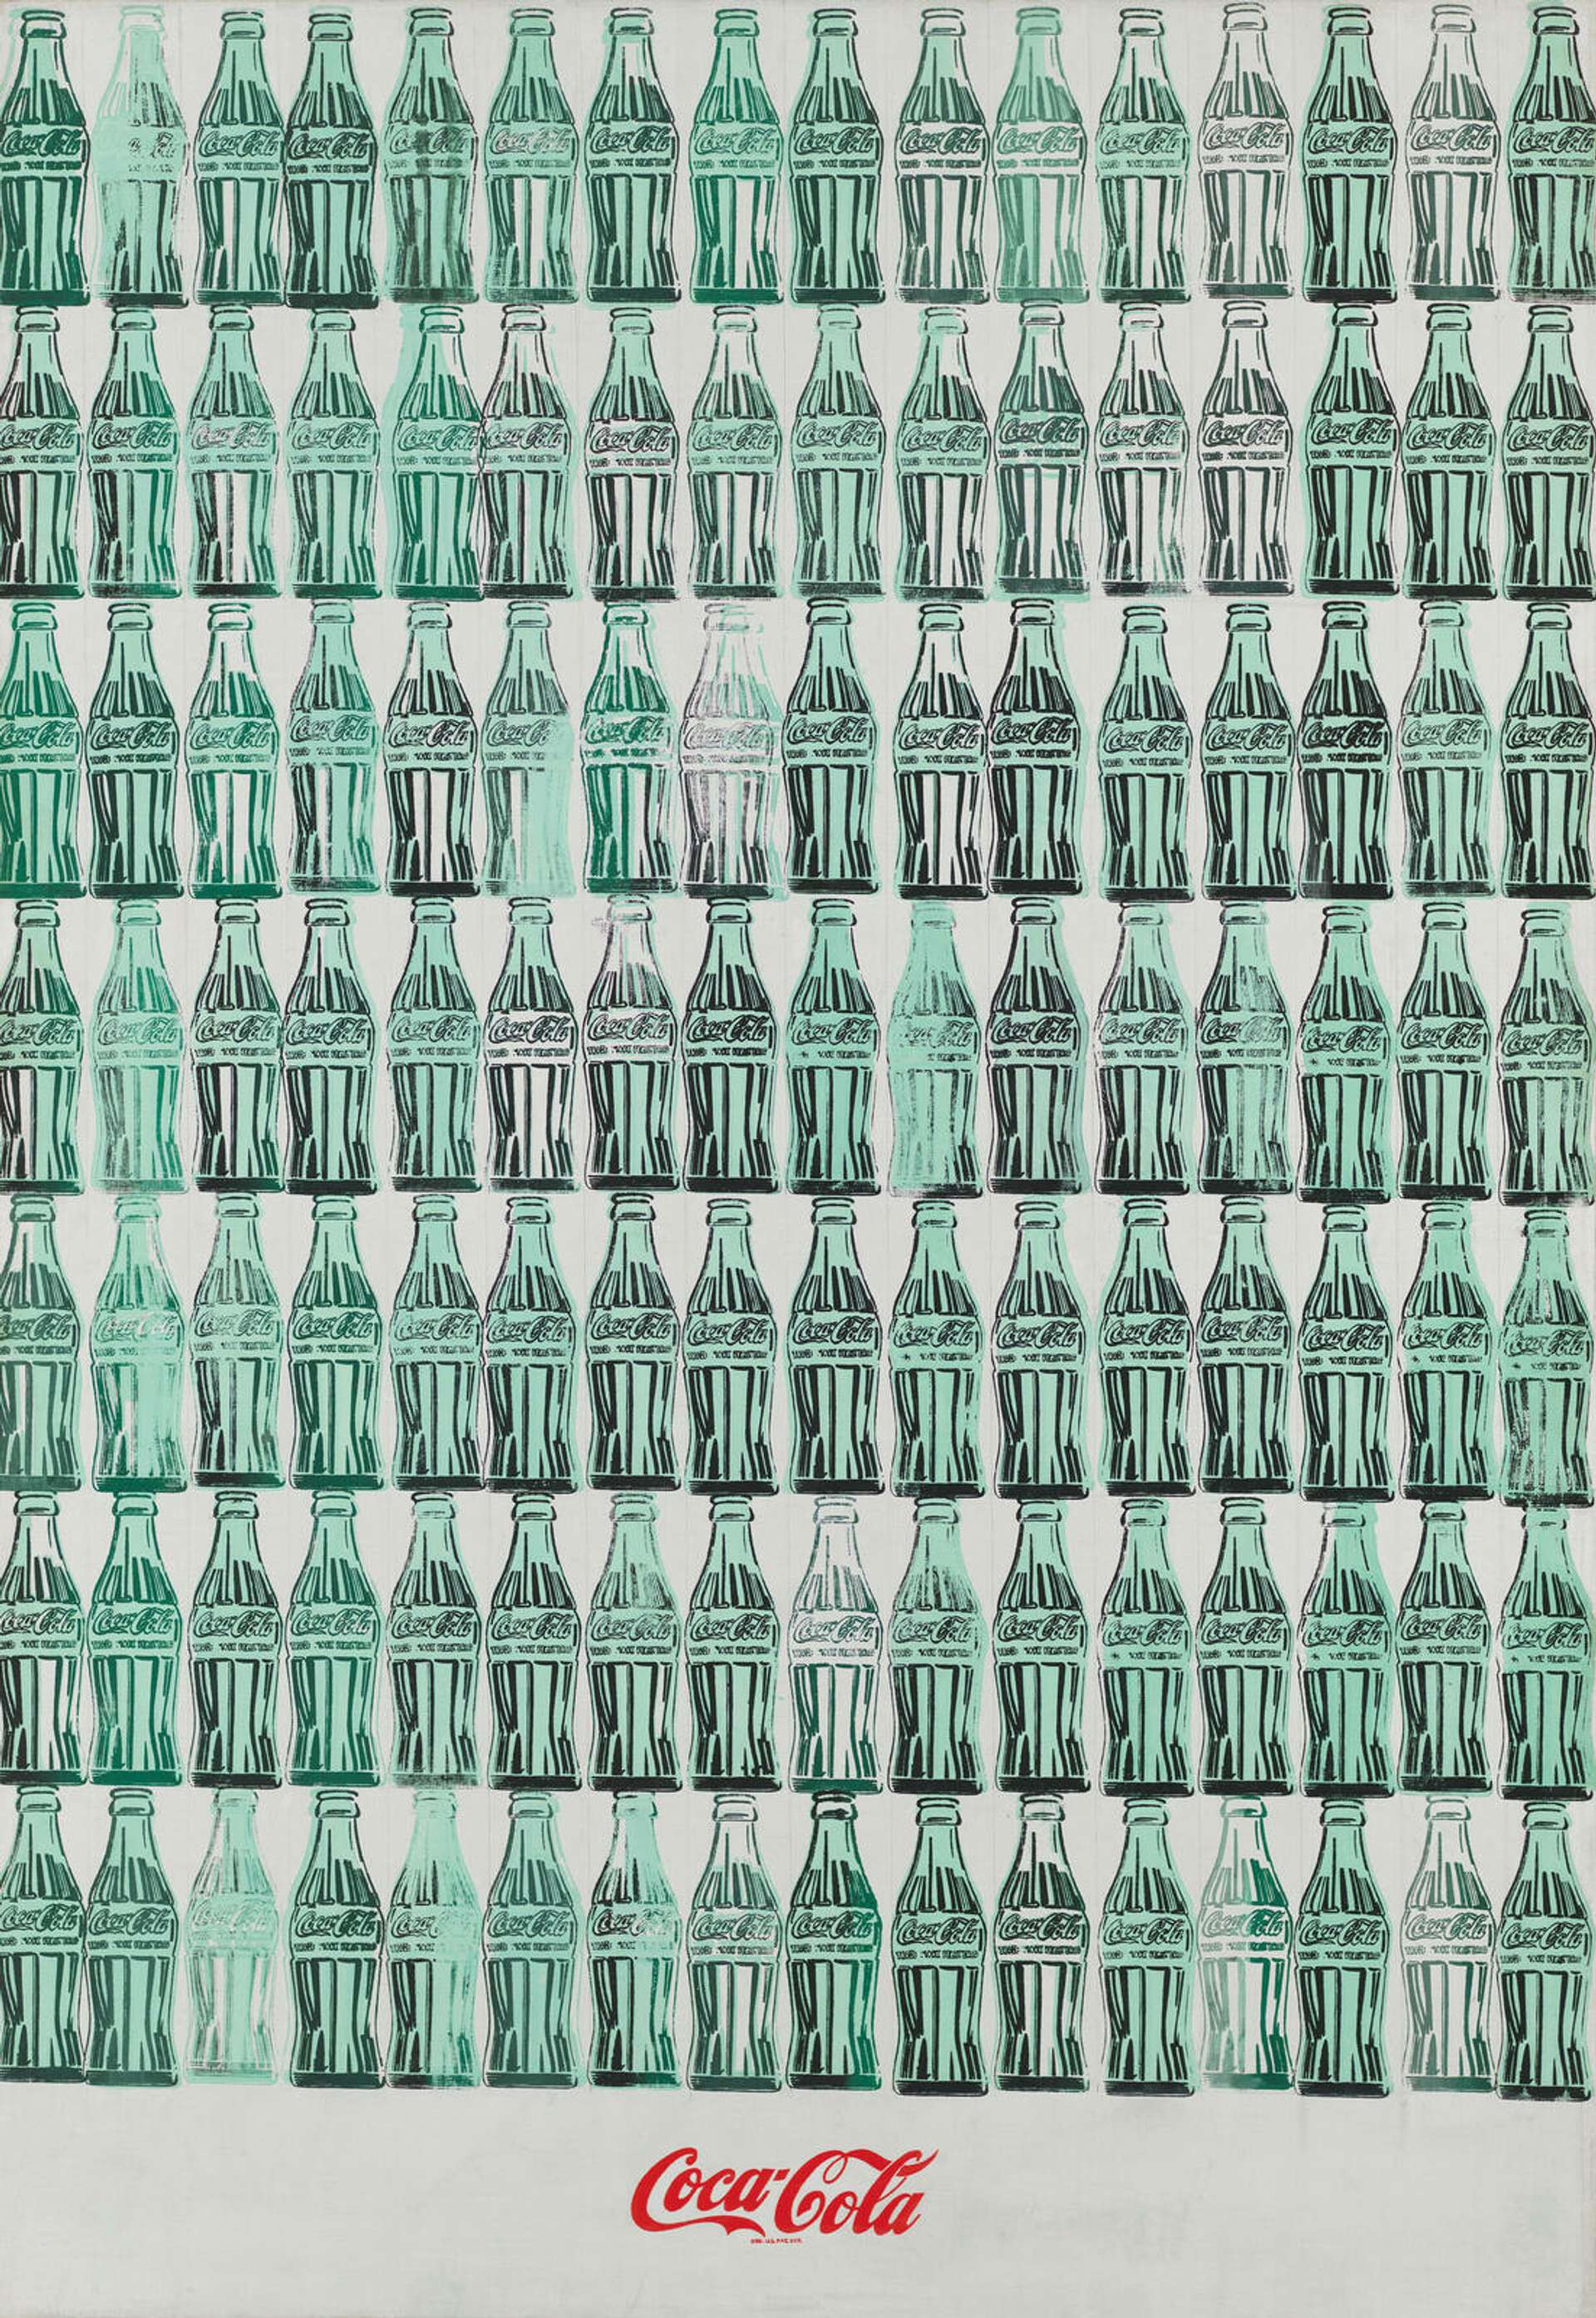 Andy Warhol’s Green Coca-Cola Bottles. Repetitive rows of green Coca-Cola bottles in Warhol’s popular advertisement style Pop Art.